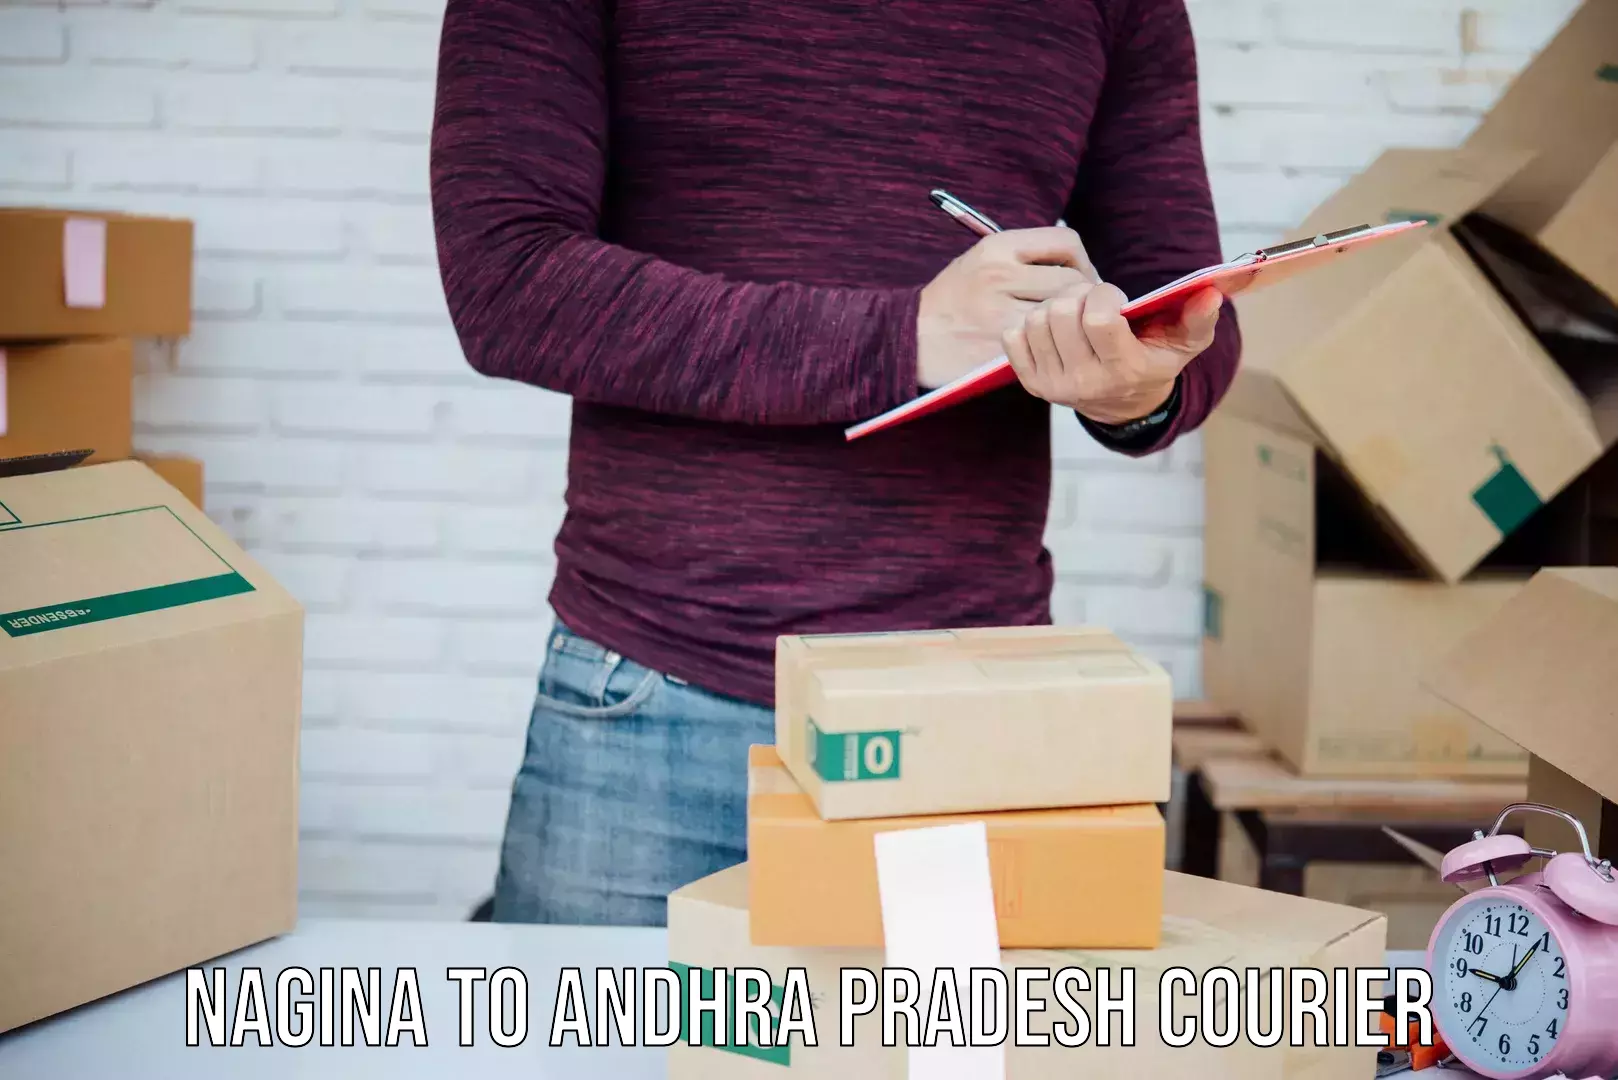 Personalized courier experiences Nagina to Andhra Pradesh